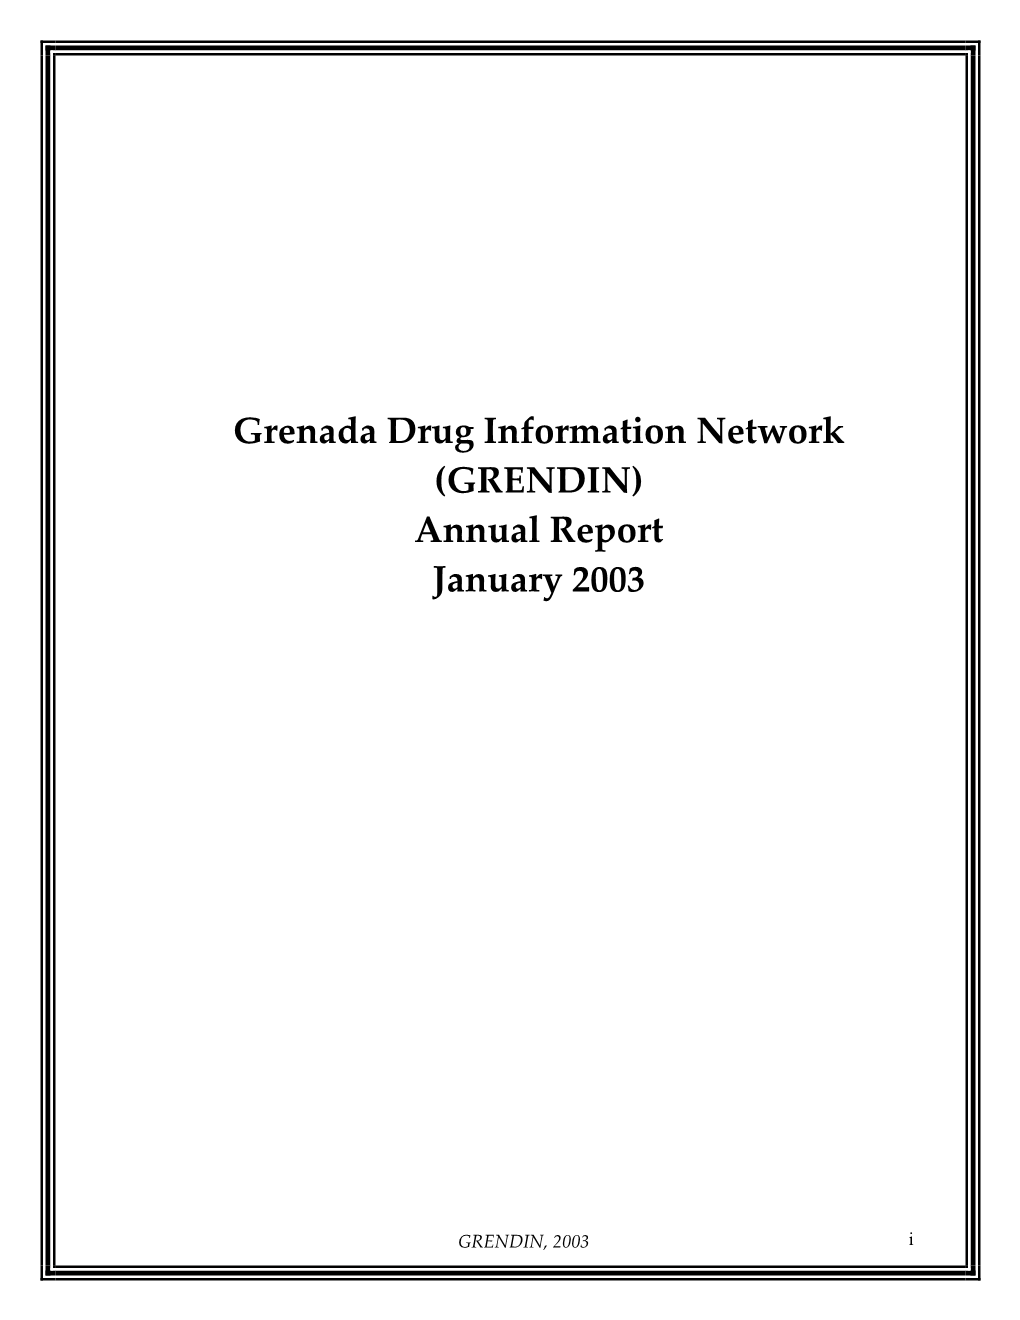 Grenada Drug Information Network (GRENDIN) Annual Report January 2003